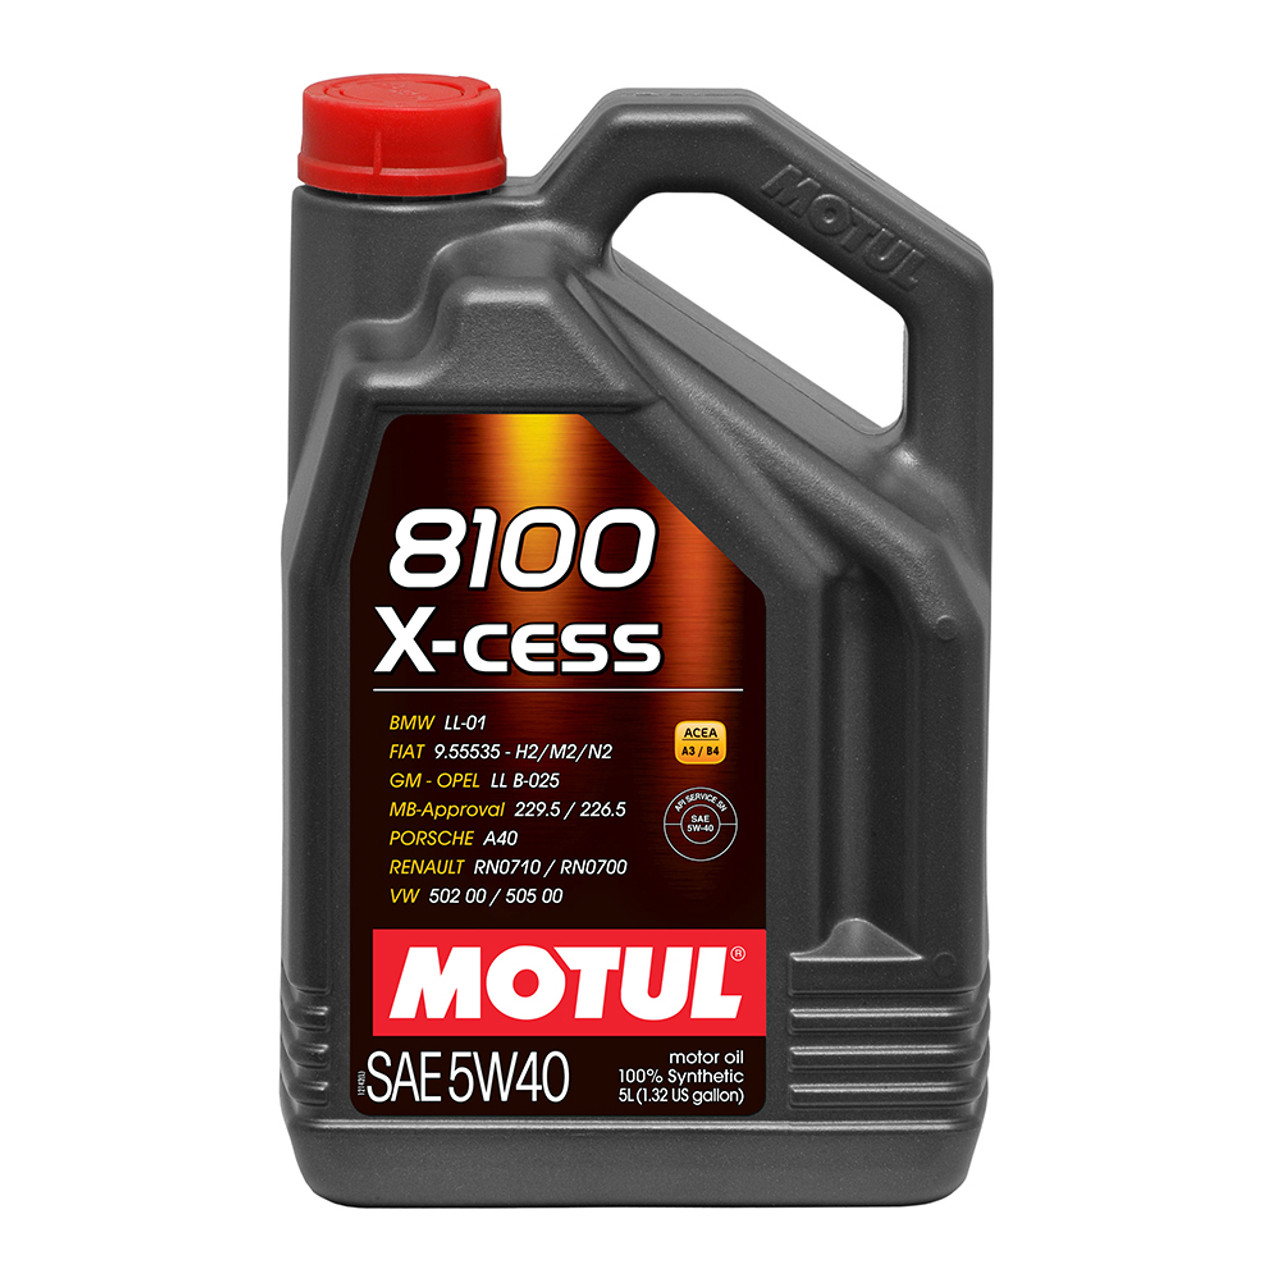 8100 X-Cess 5w40 Oil 5 Liter Bottle